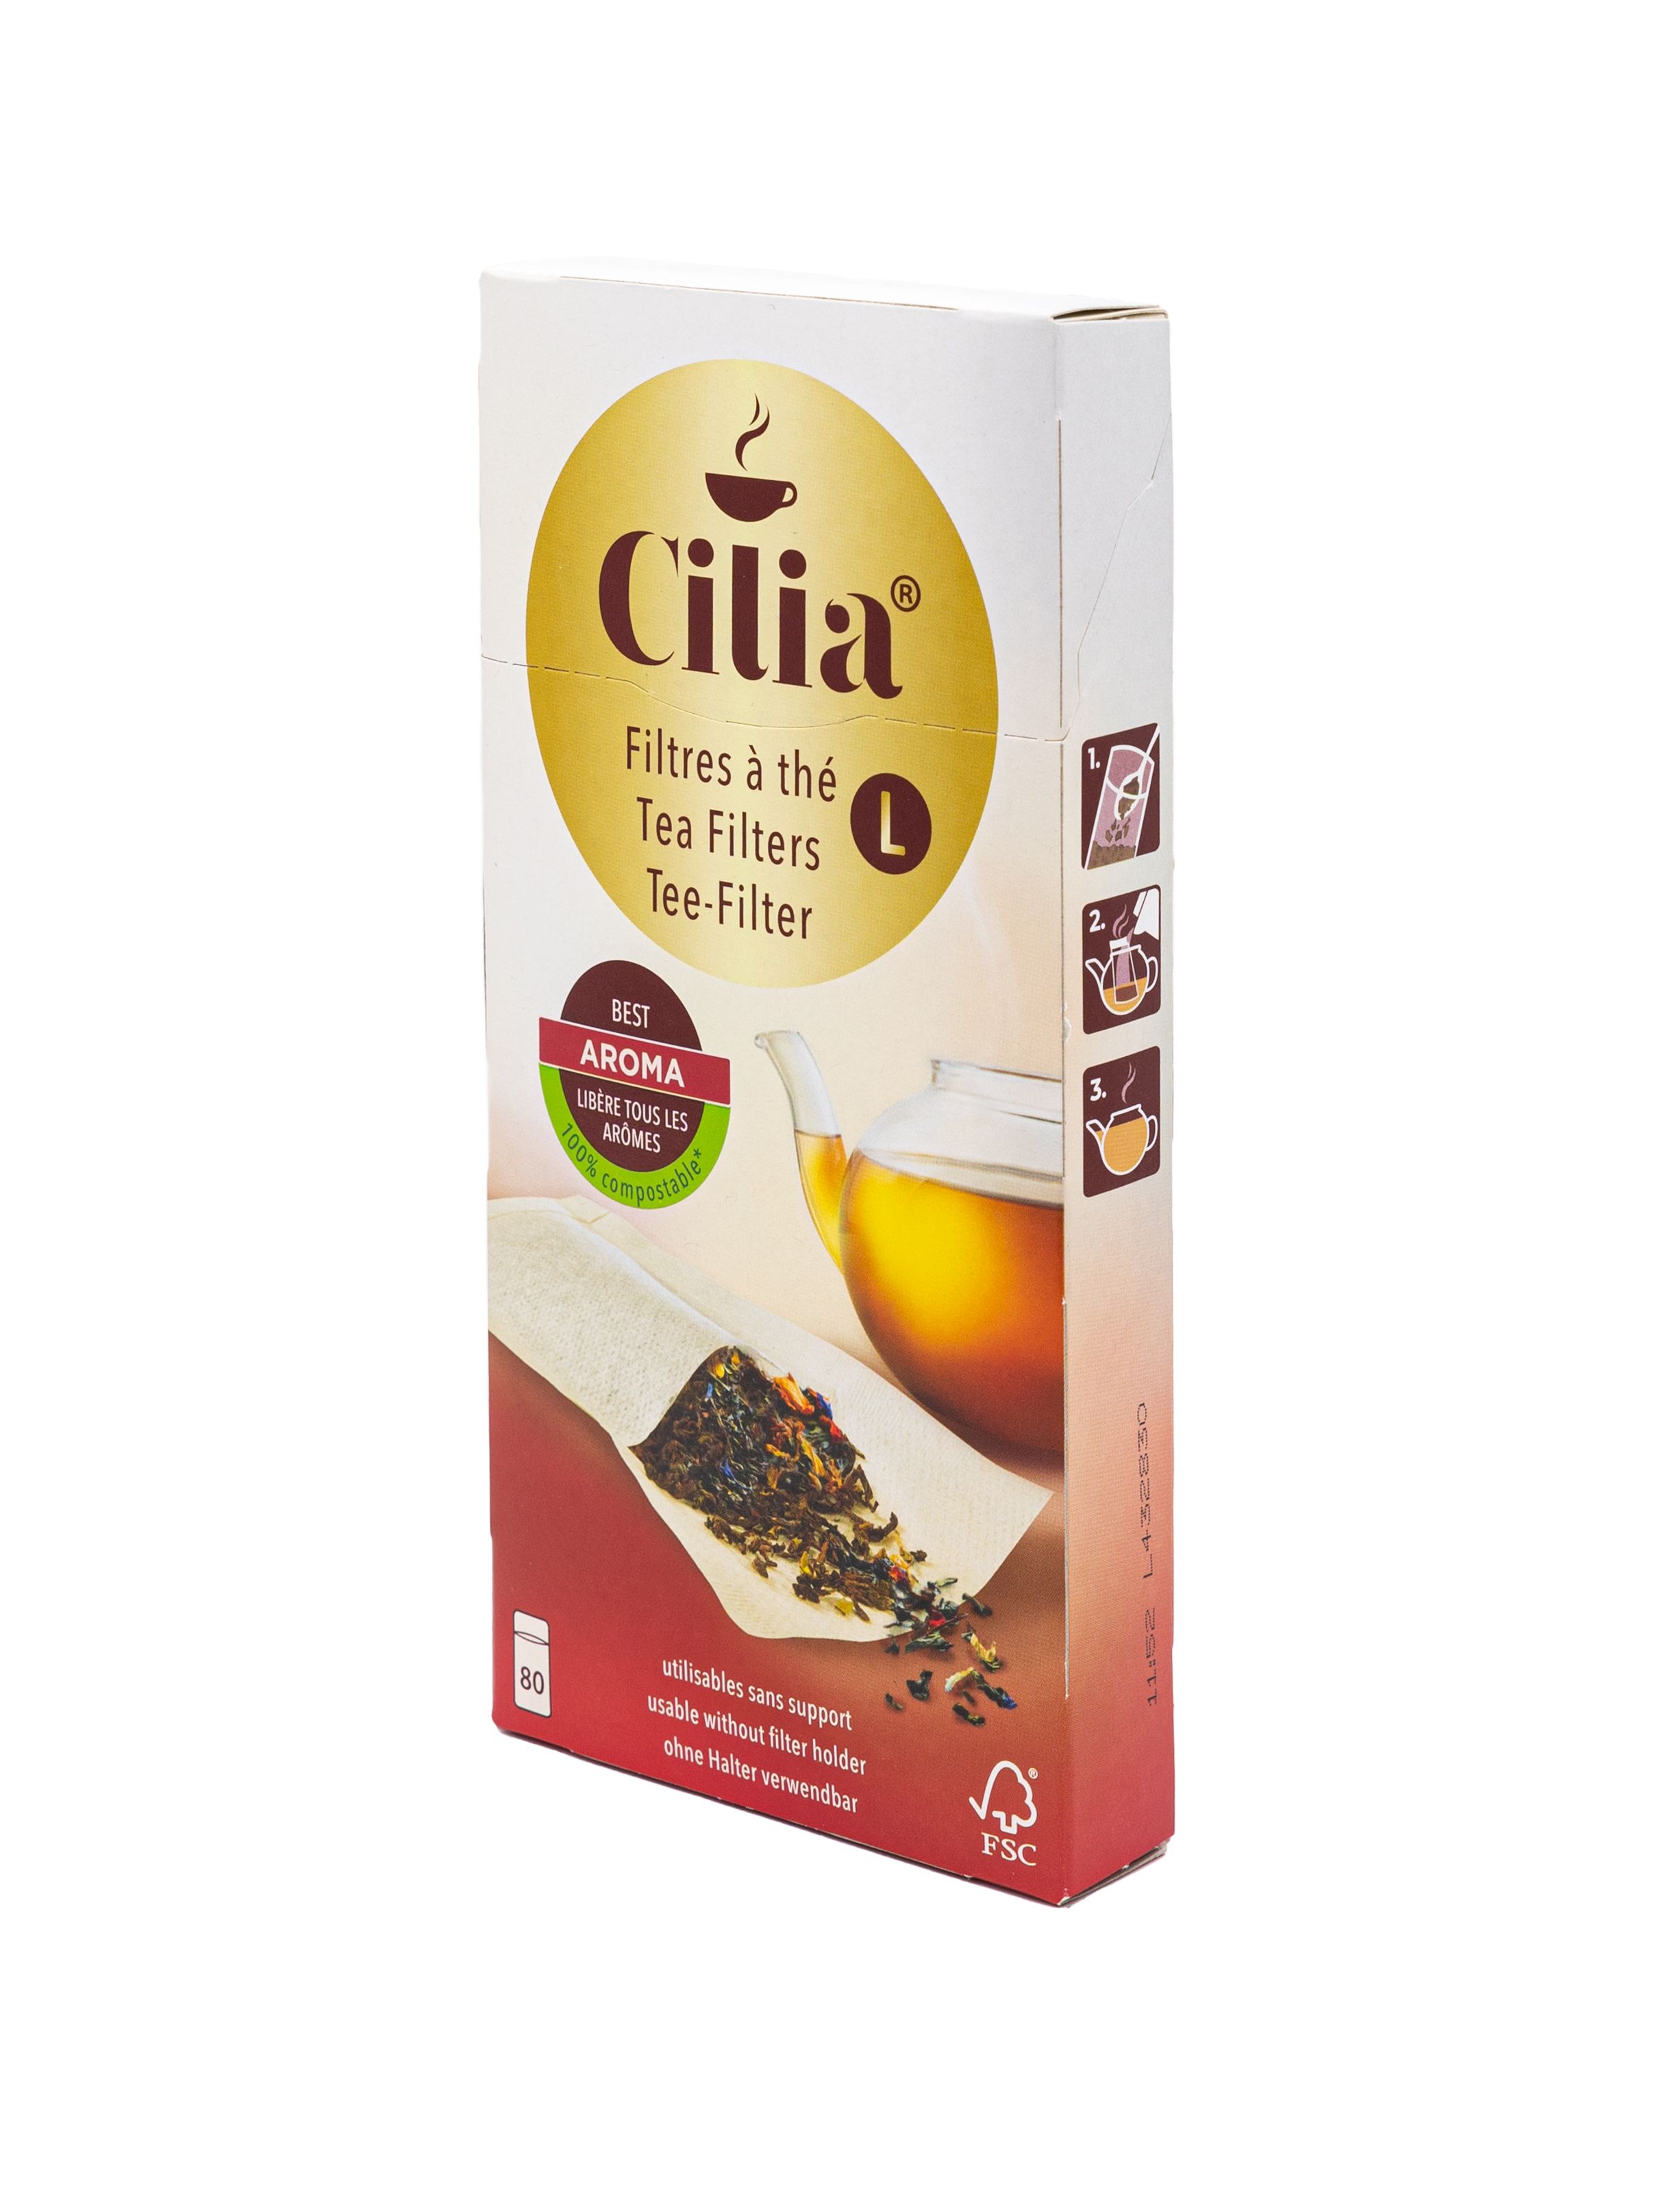 Cilia® Teefilter L: Der Teefilter für größere Tee-Mengen